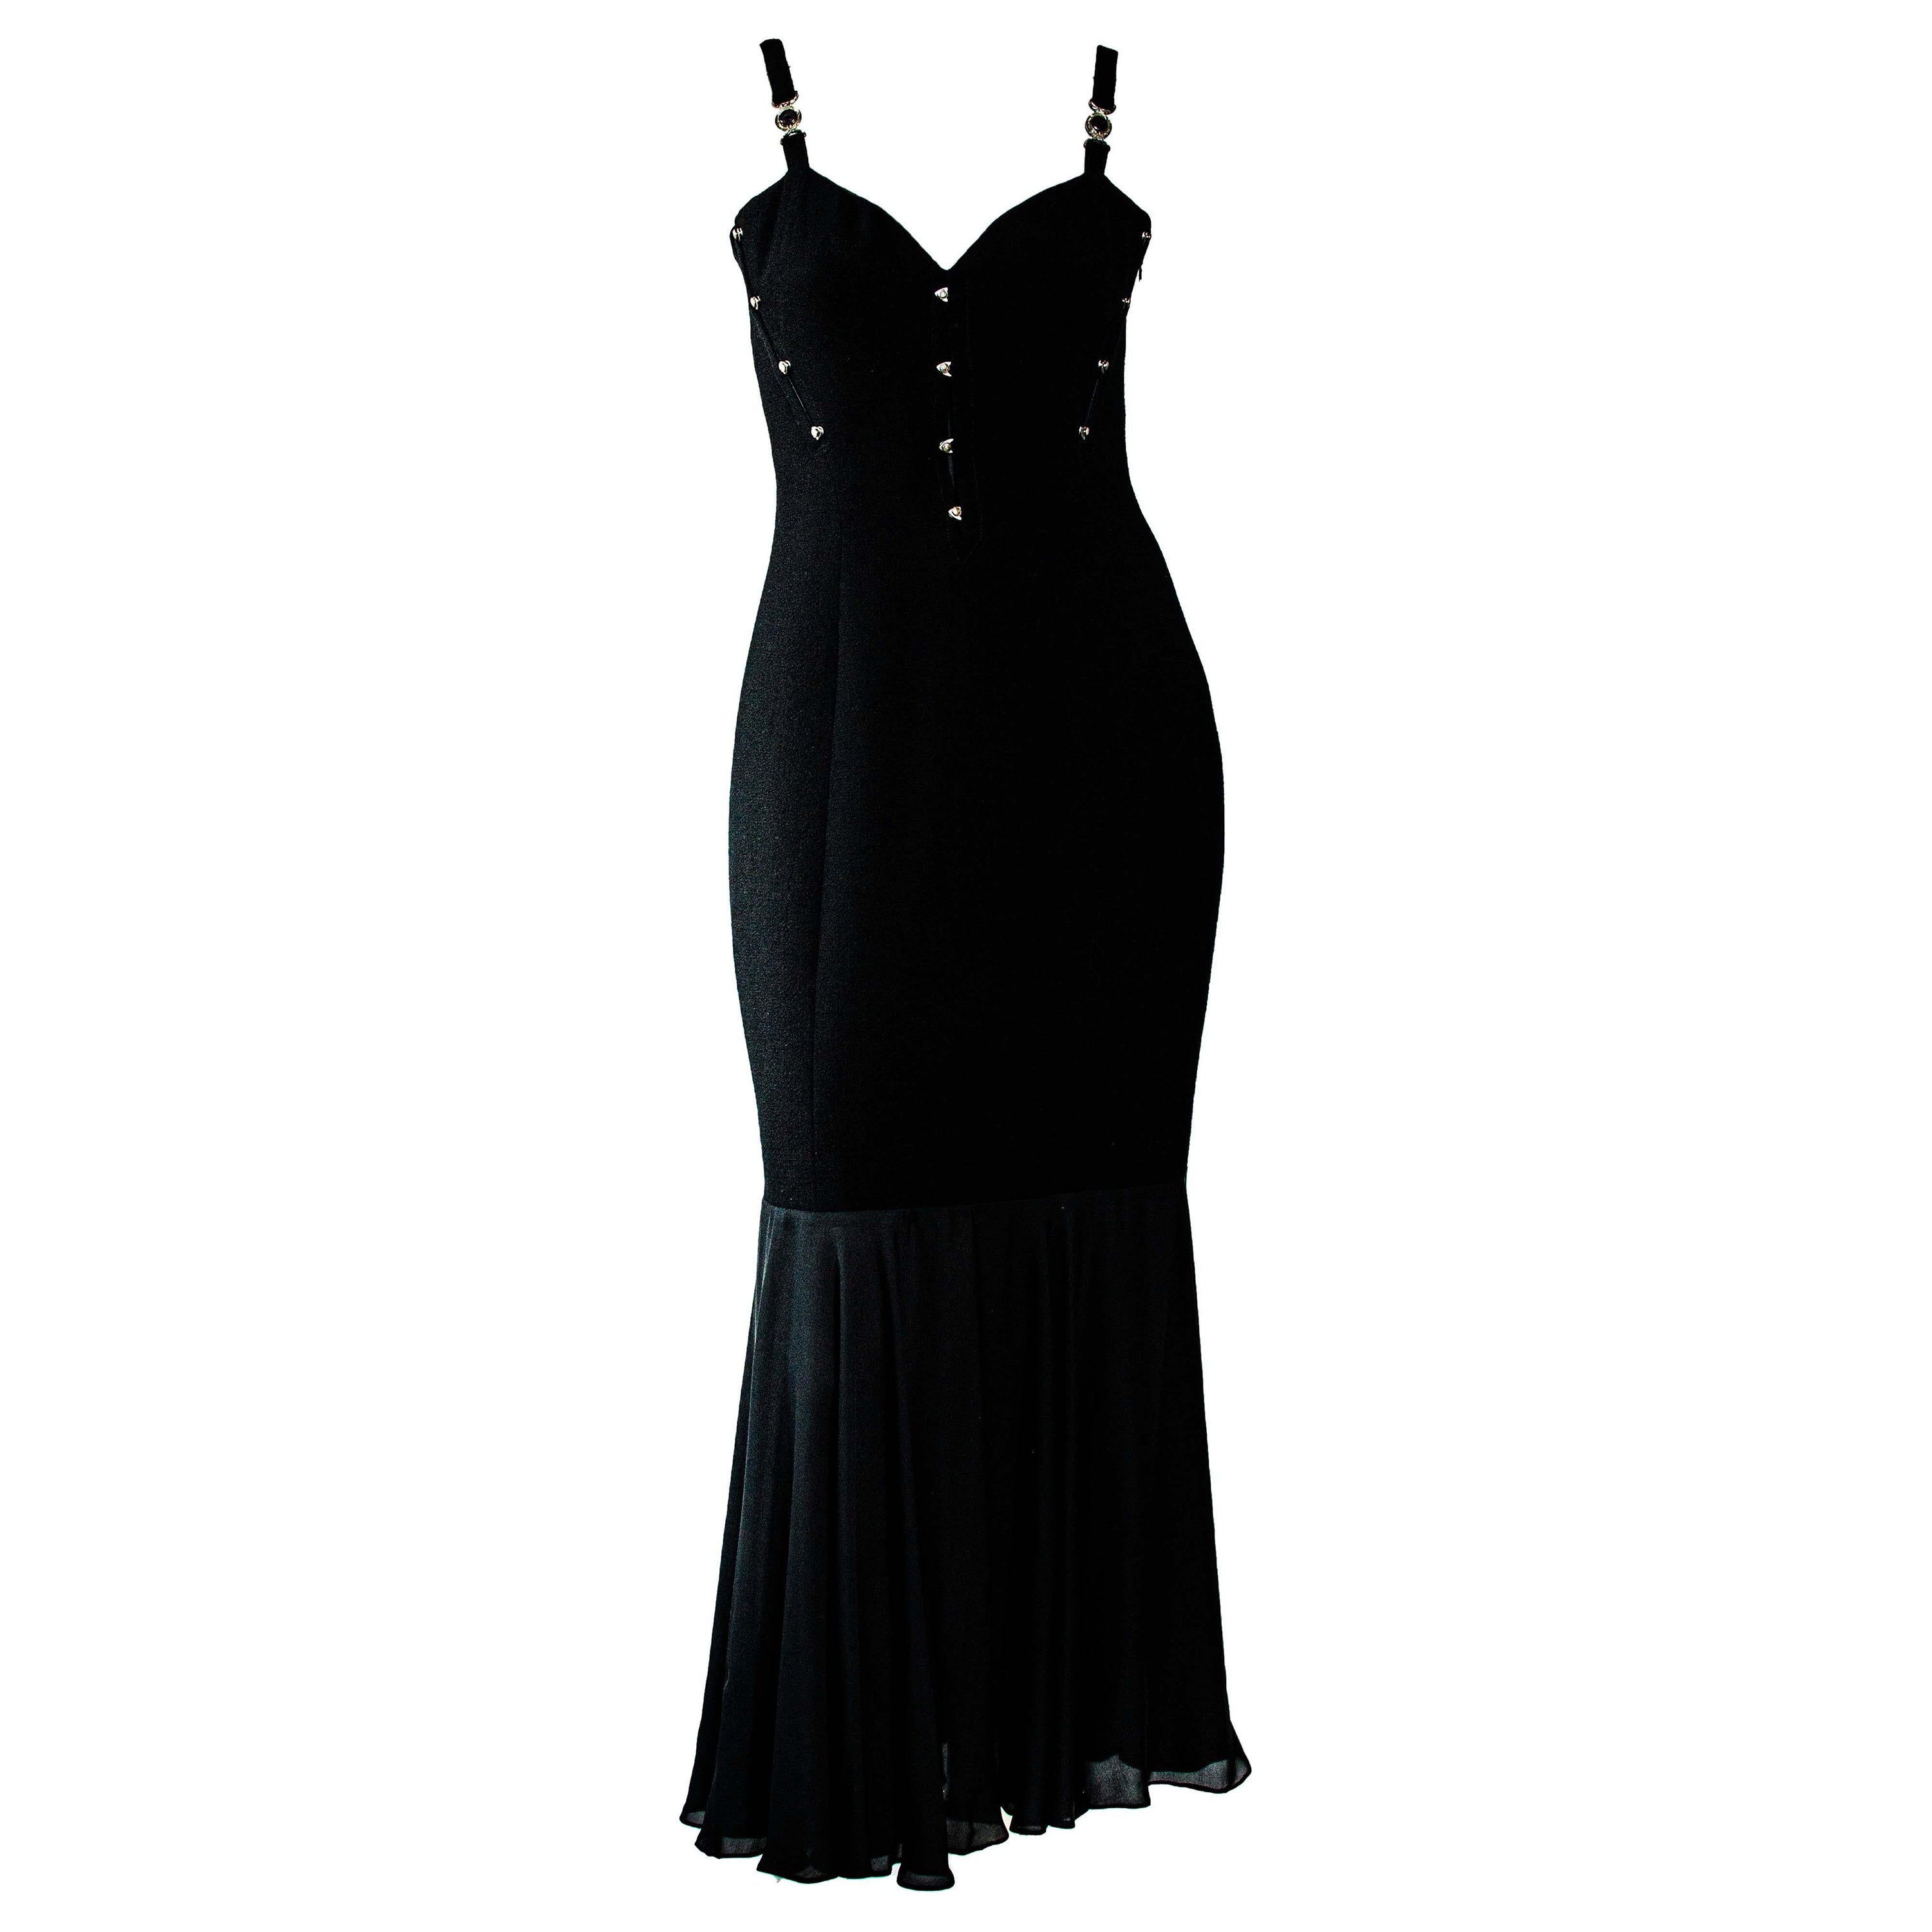 S/S 1995 Gianni Versace Couture Bustier Medusa Corset Boned Flare Black Dress  For Sale